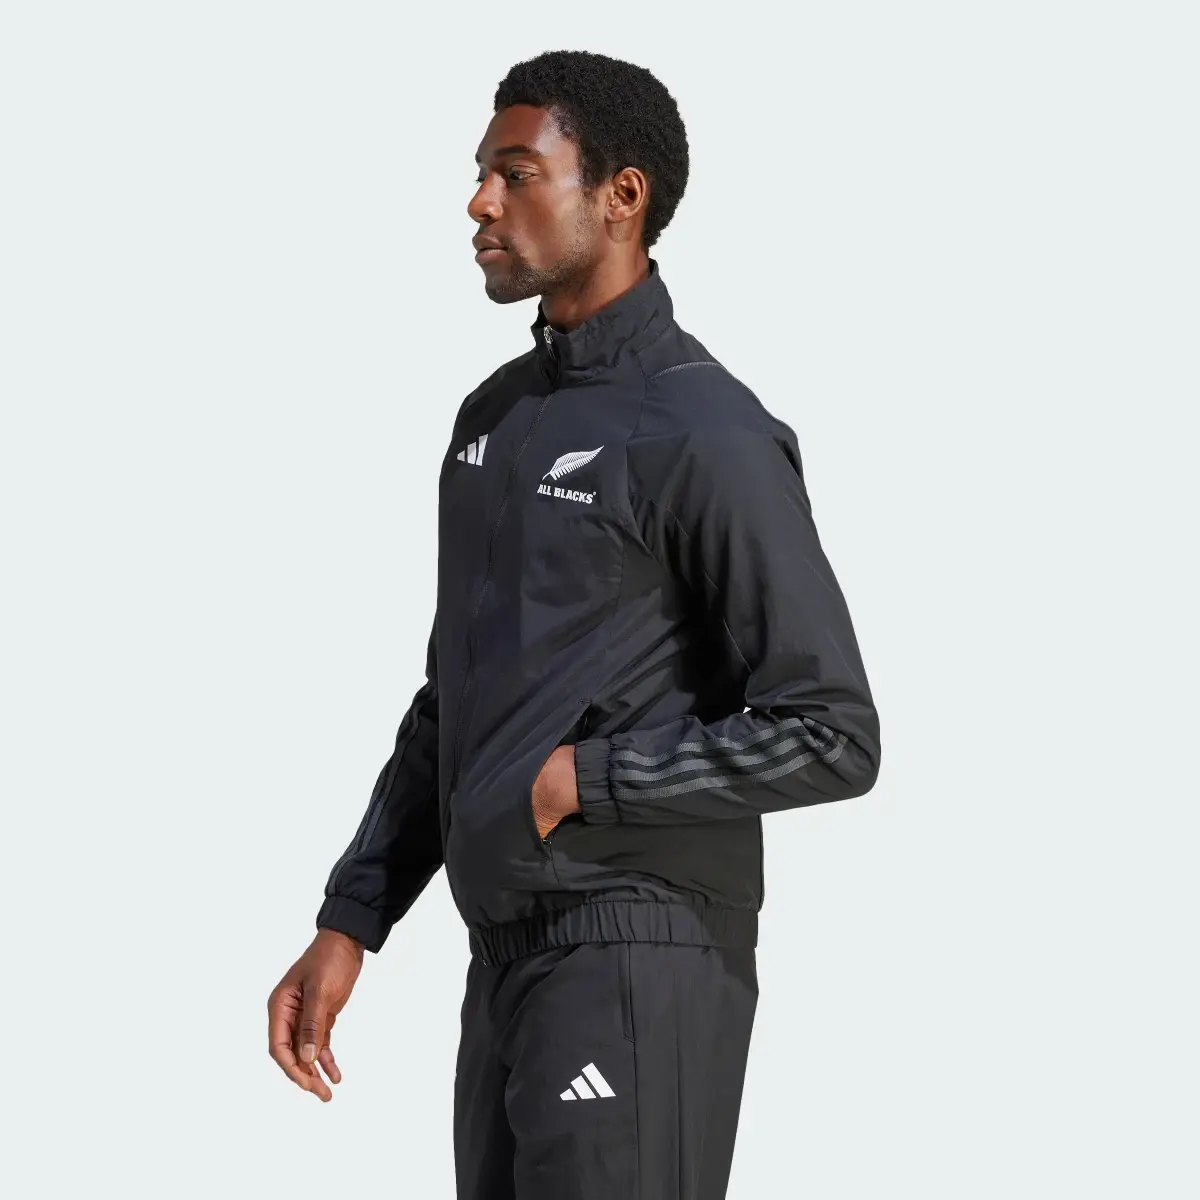 Adidas All Blacks Rugby Track Suit Jacket. 3